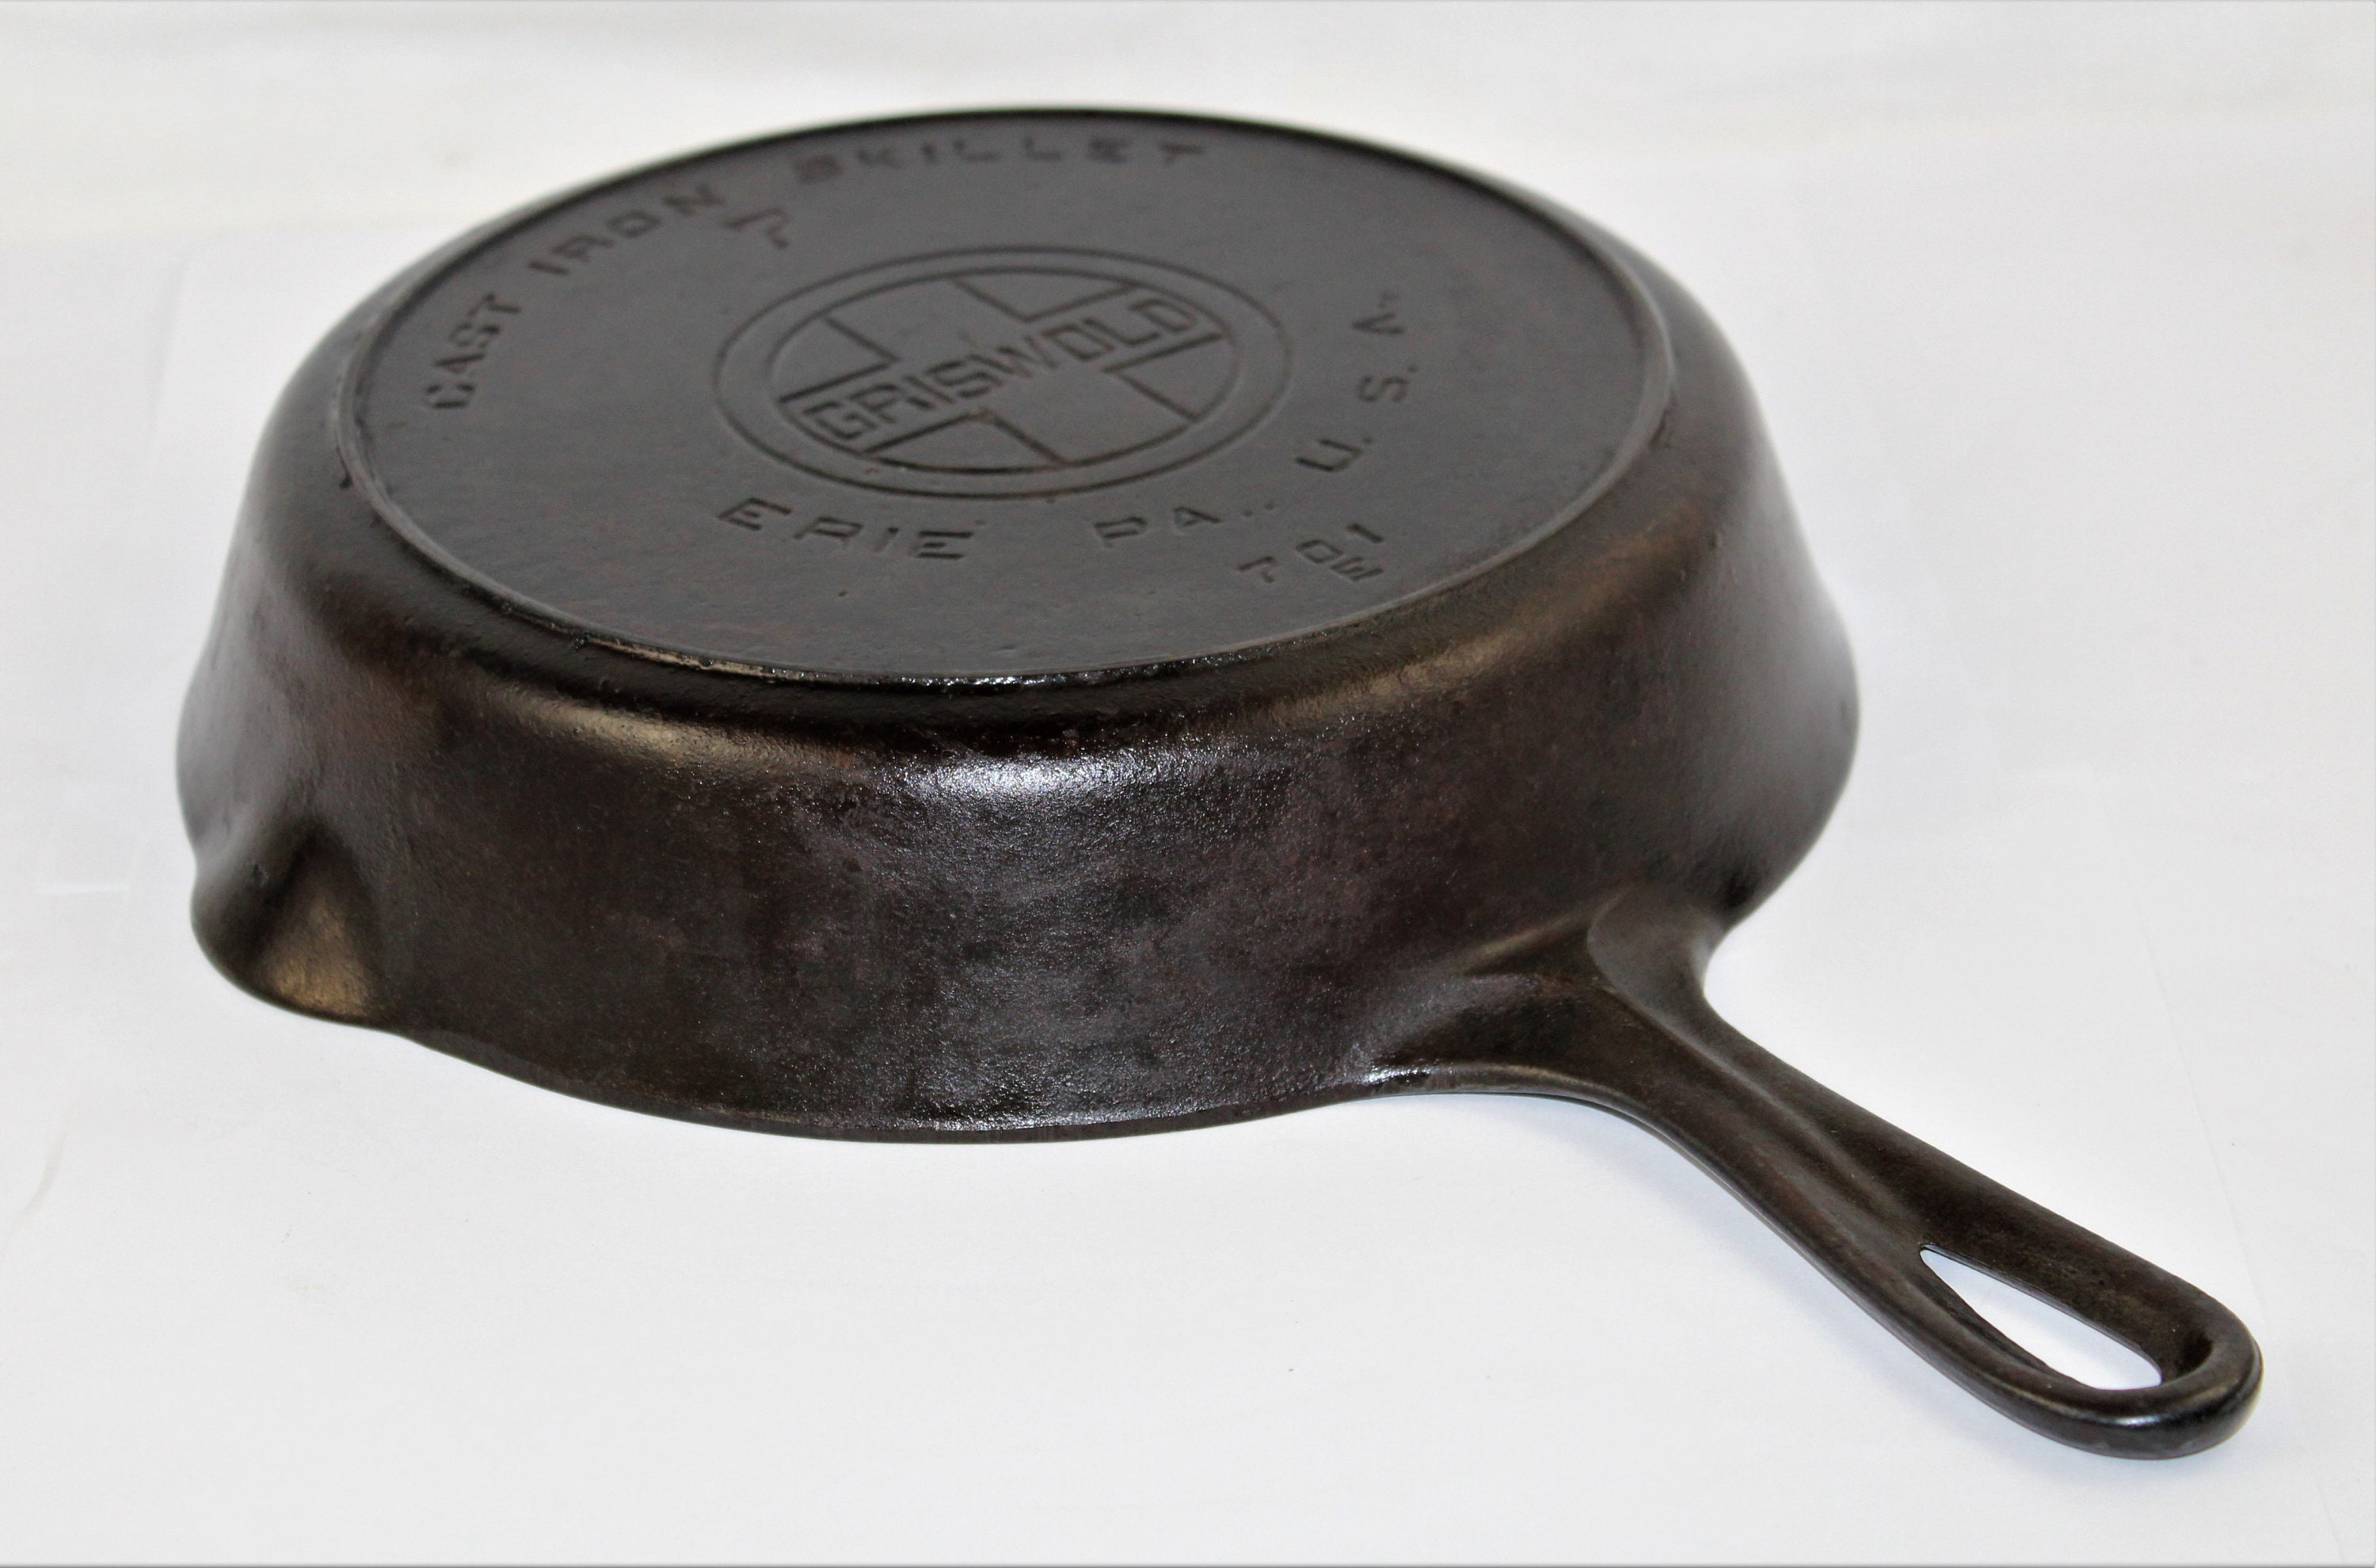 Griswold Cast Iron Cookware Part 6 #castiron #antique #history #foodti